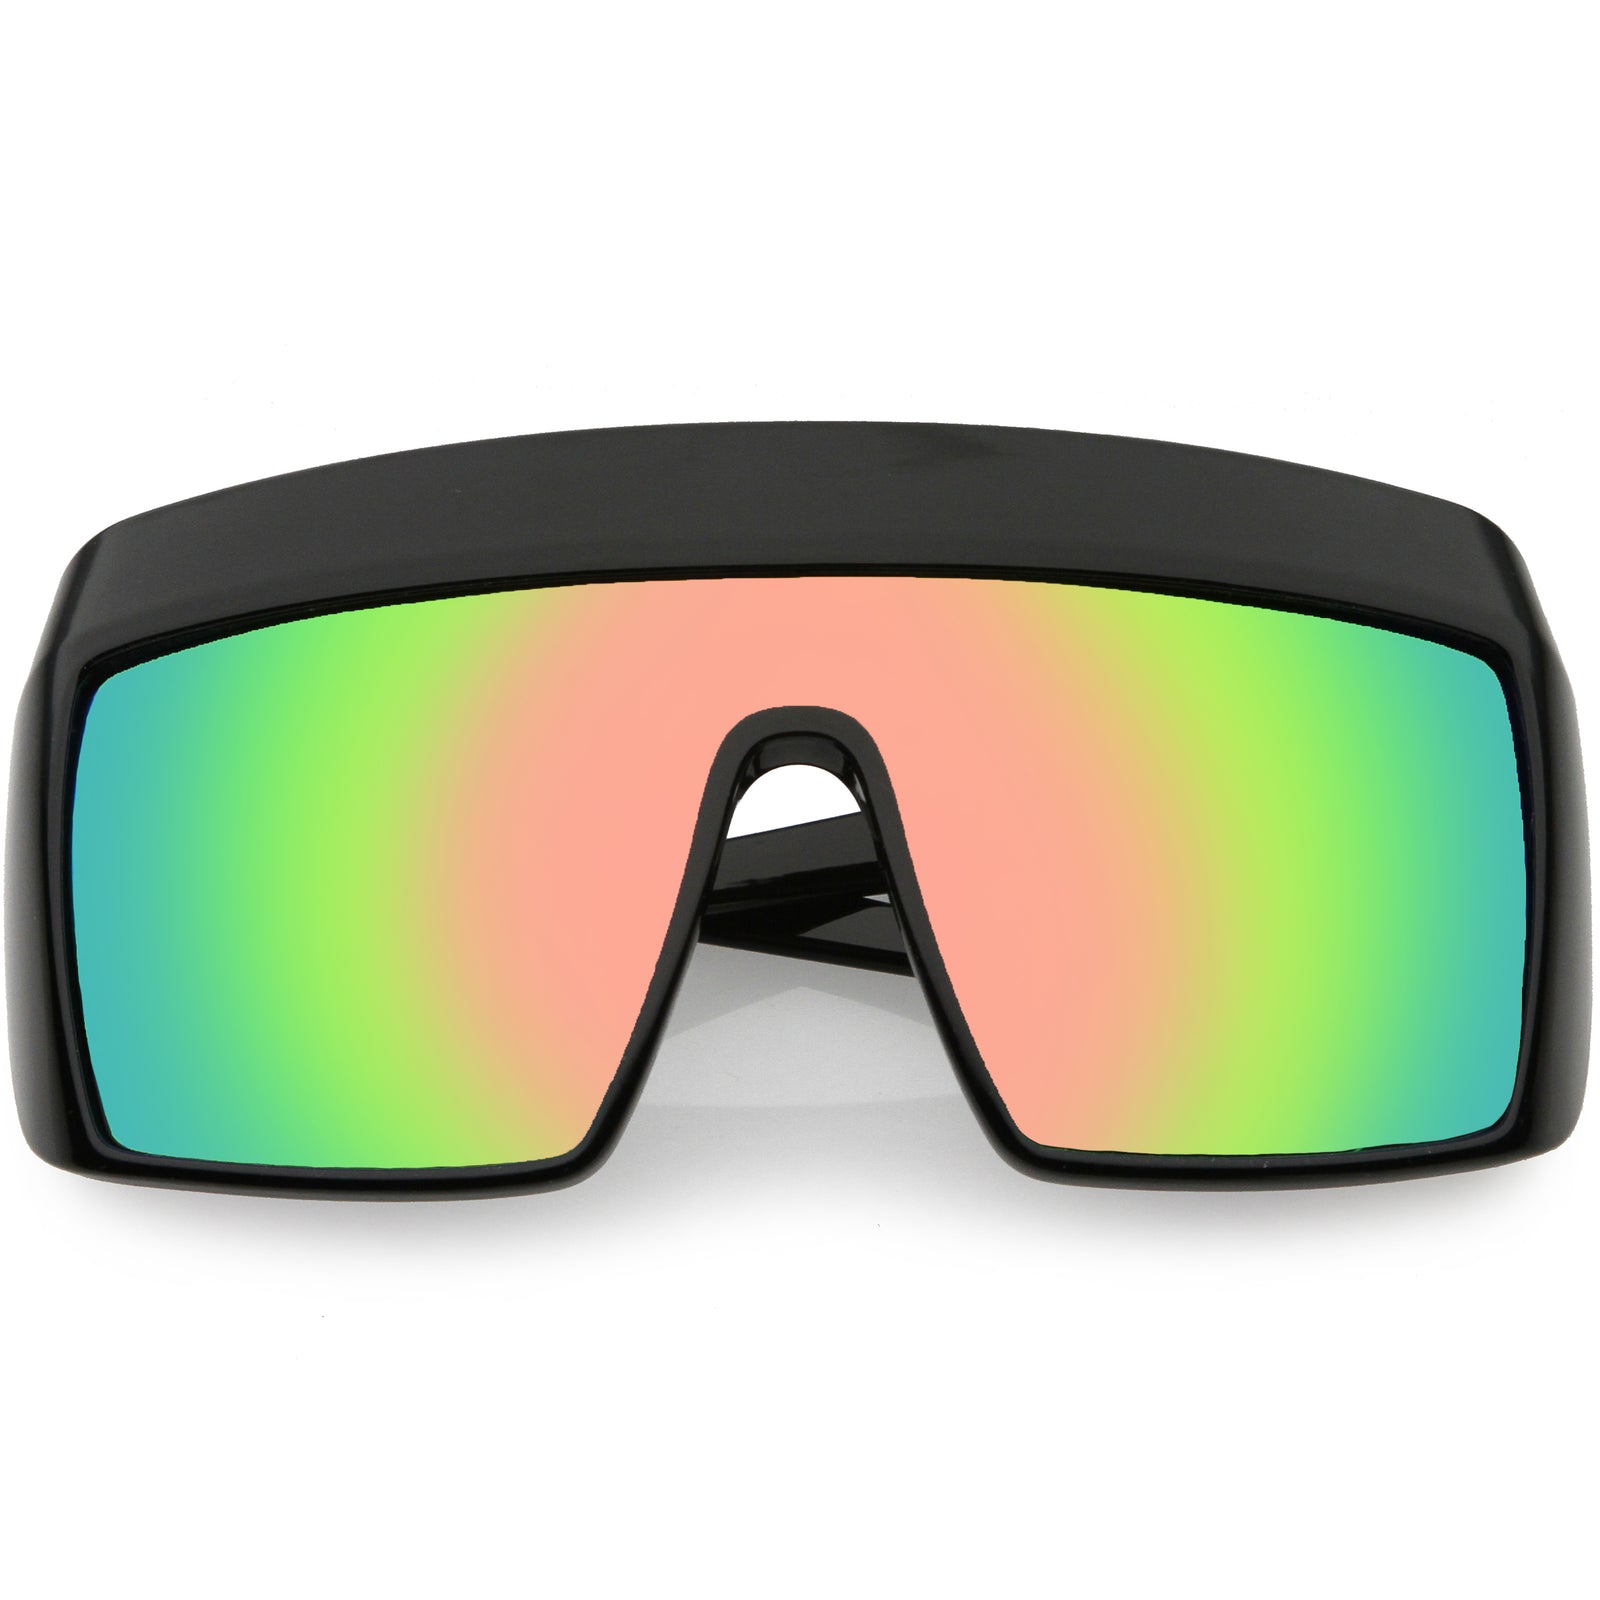 Mirrored lens sunglasses  zeroUV® Eyewear Tagged womens